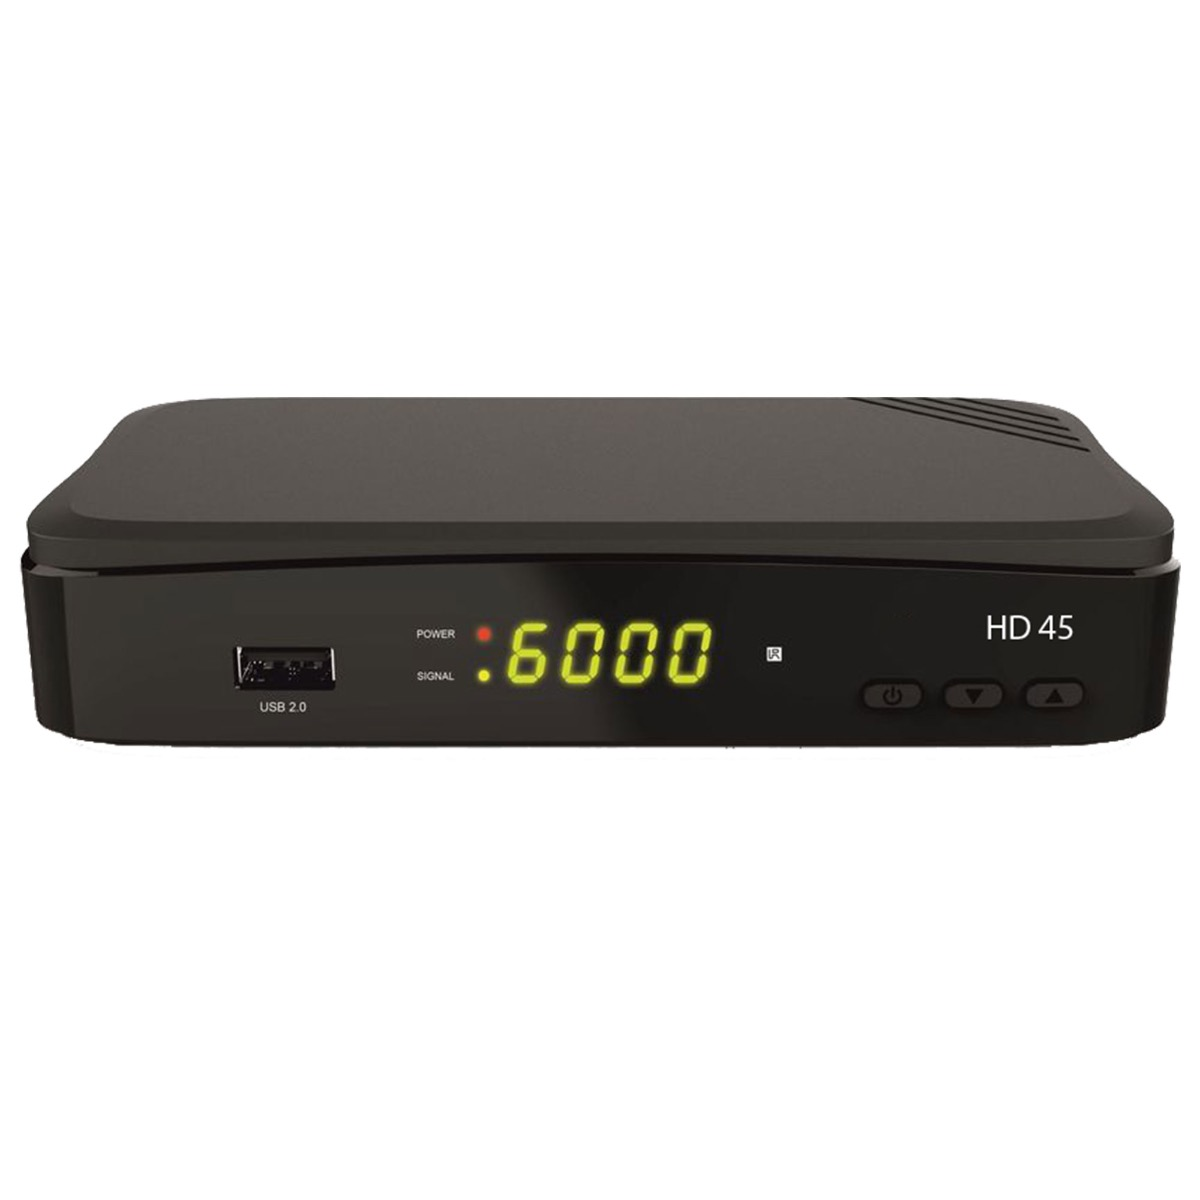 COMAG HD45 Satellitenreceiver schwarz) DVB-S, DVB-S2, (HDTV